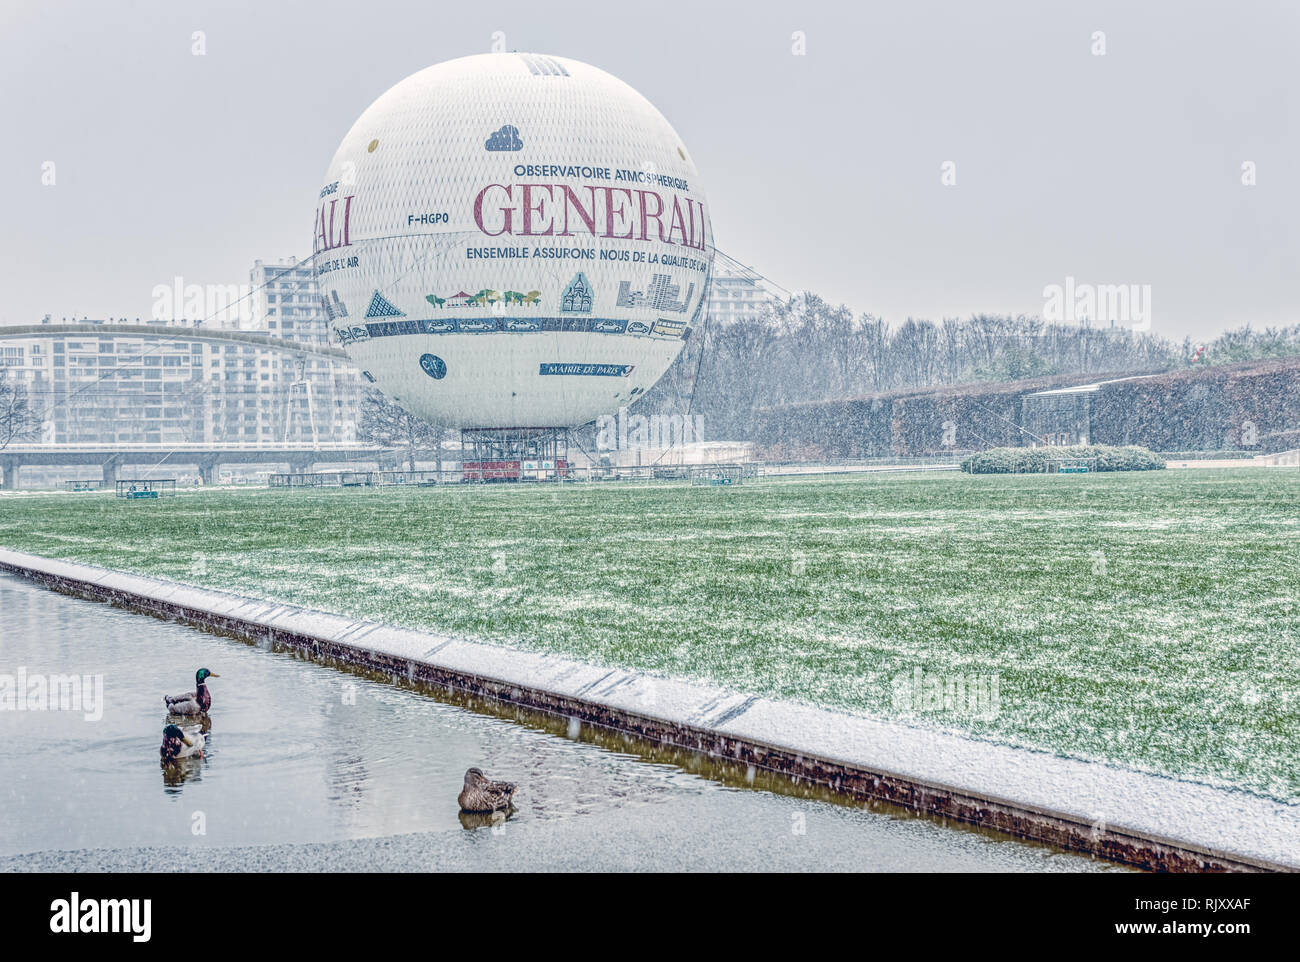 Snowfall on Balloon in Parc Andre Citroen - Paris, France Stock Photo